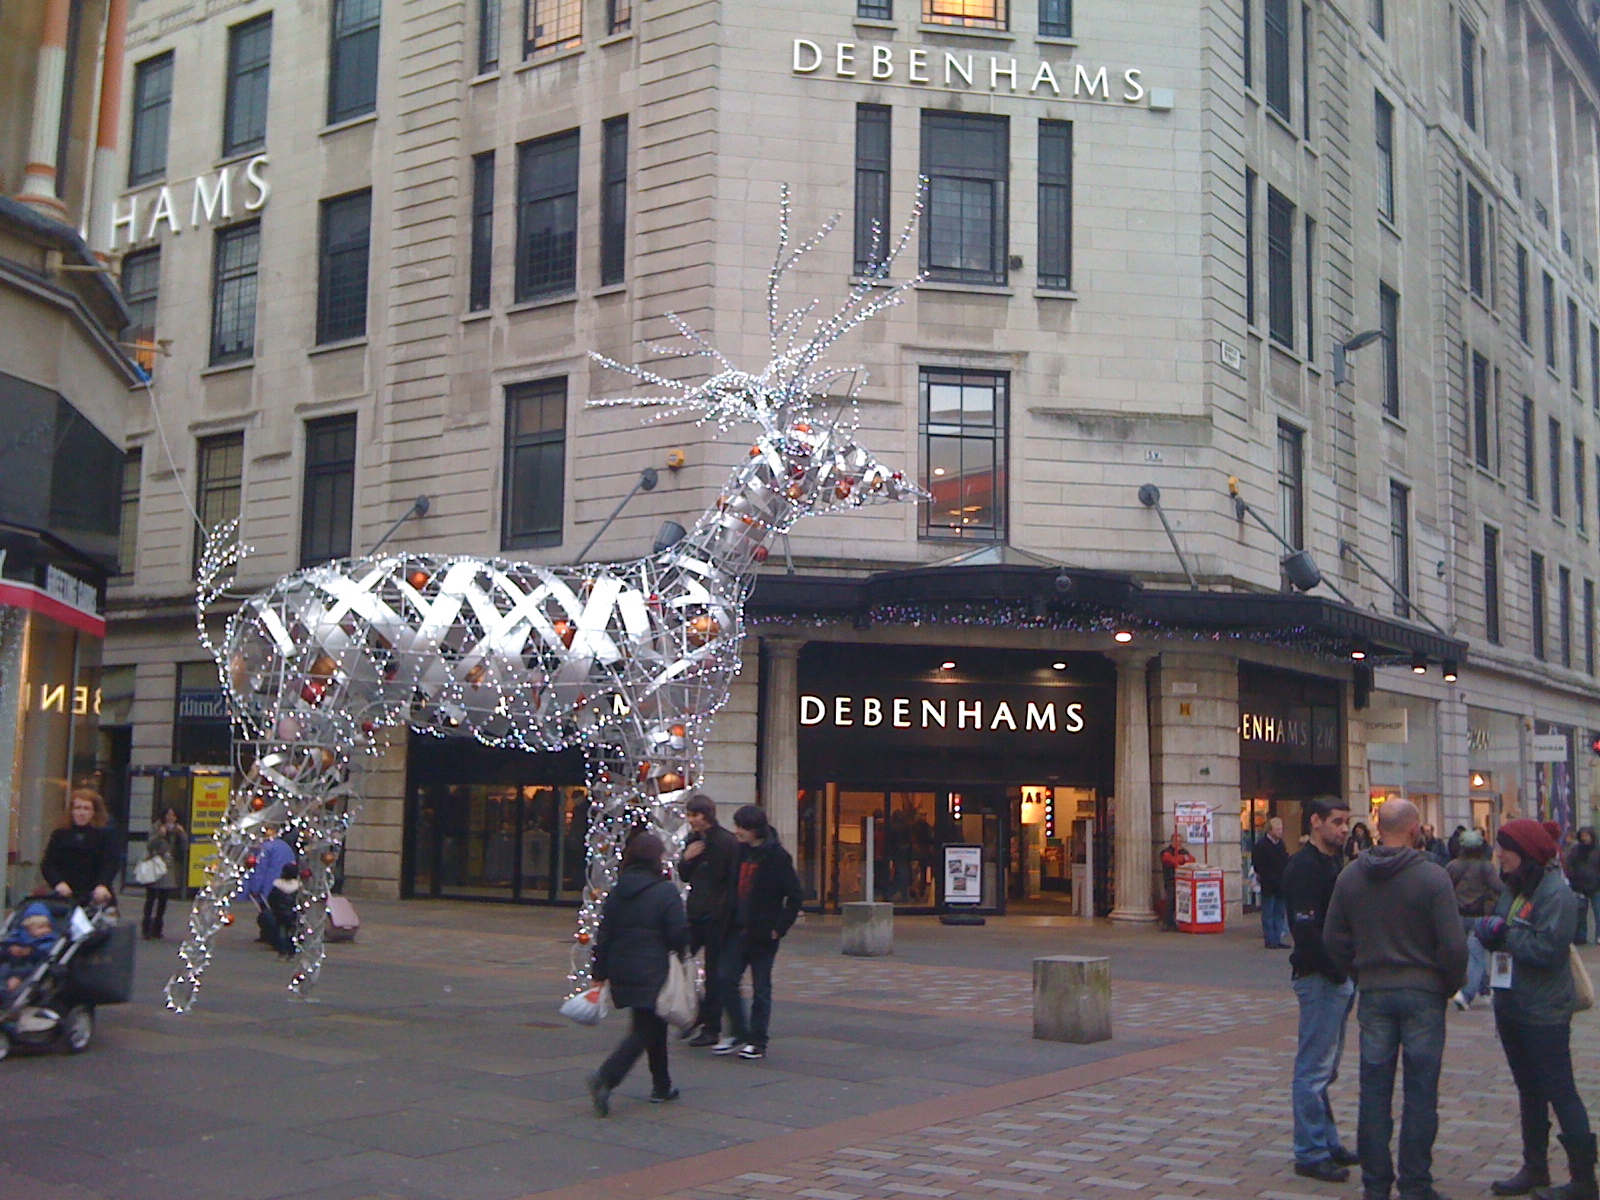 Debenhams Glasgow November 2011